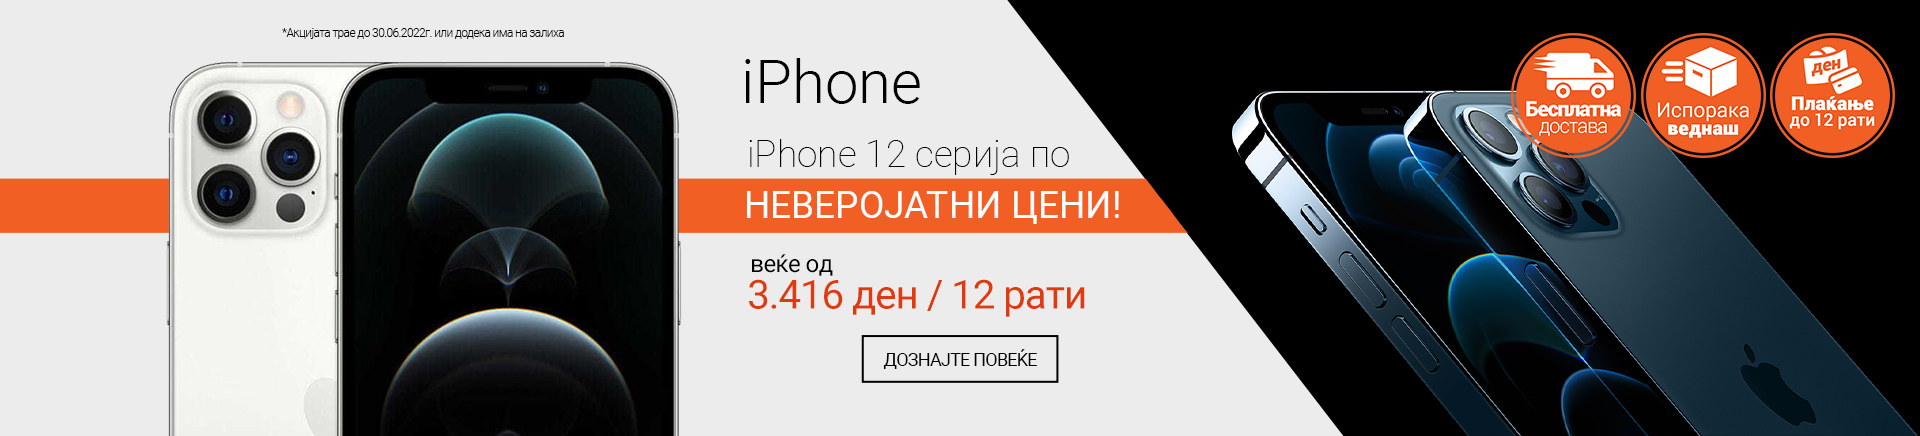 MK iPhone 12 MOBILE 380 X 436.jpg